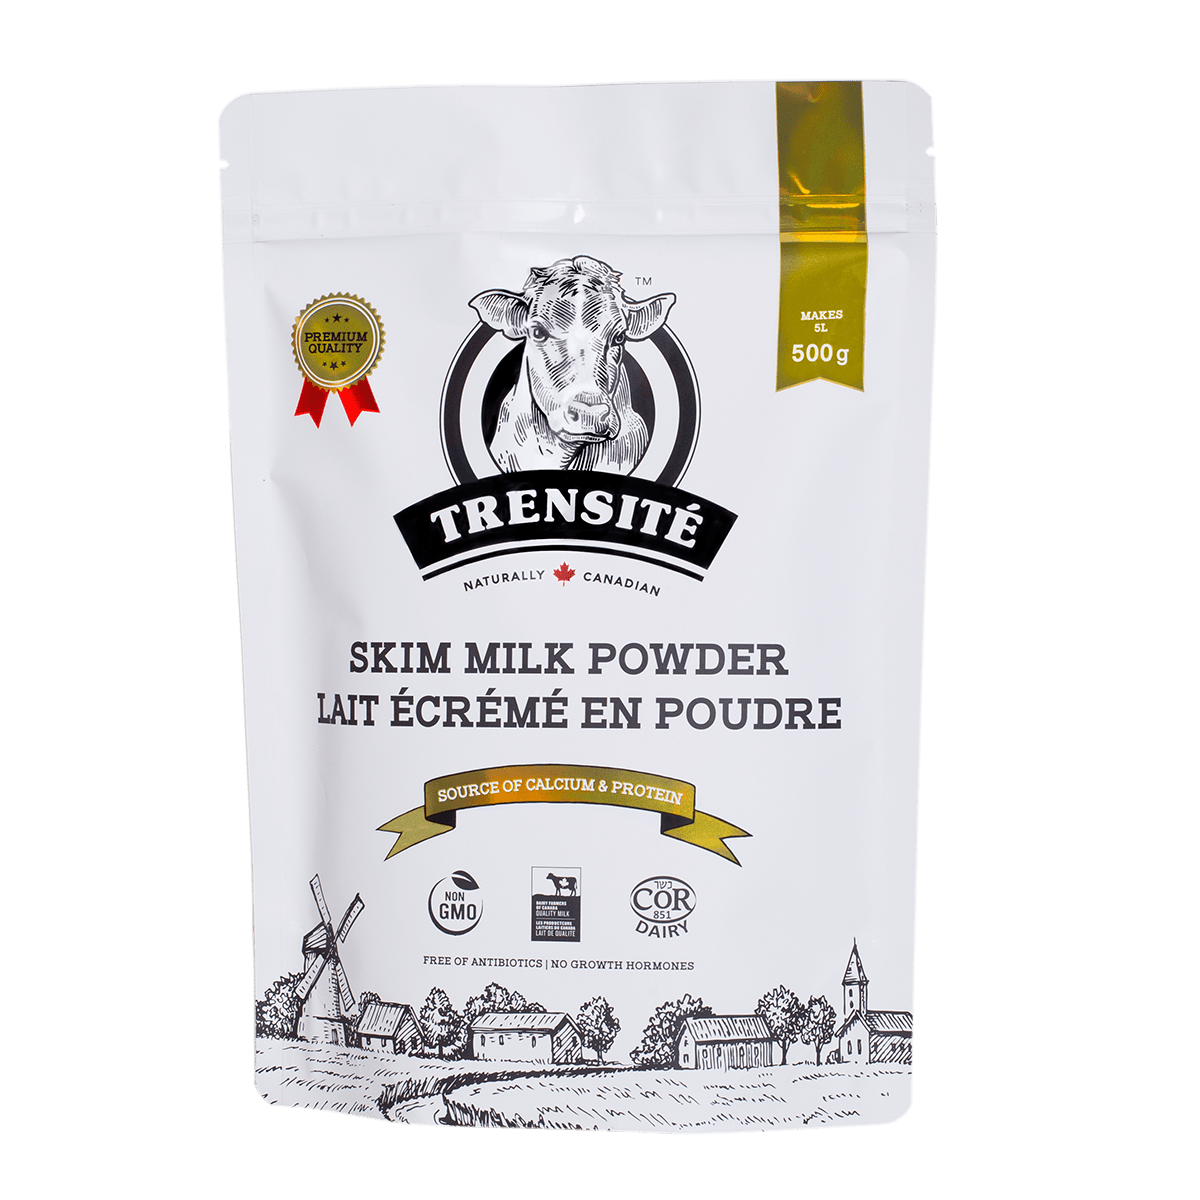 Trensite Dairy Skim Milk Powder products